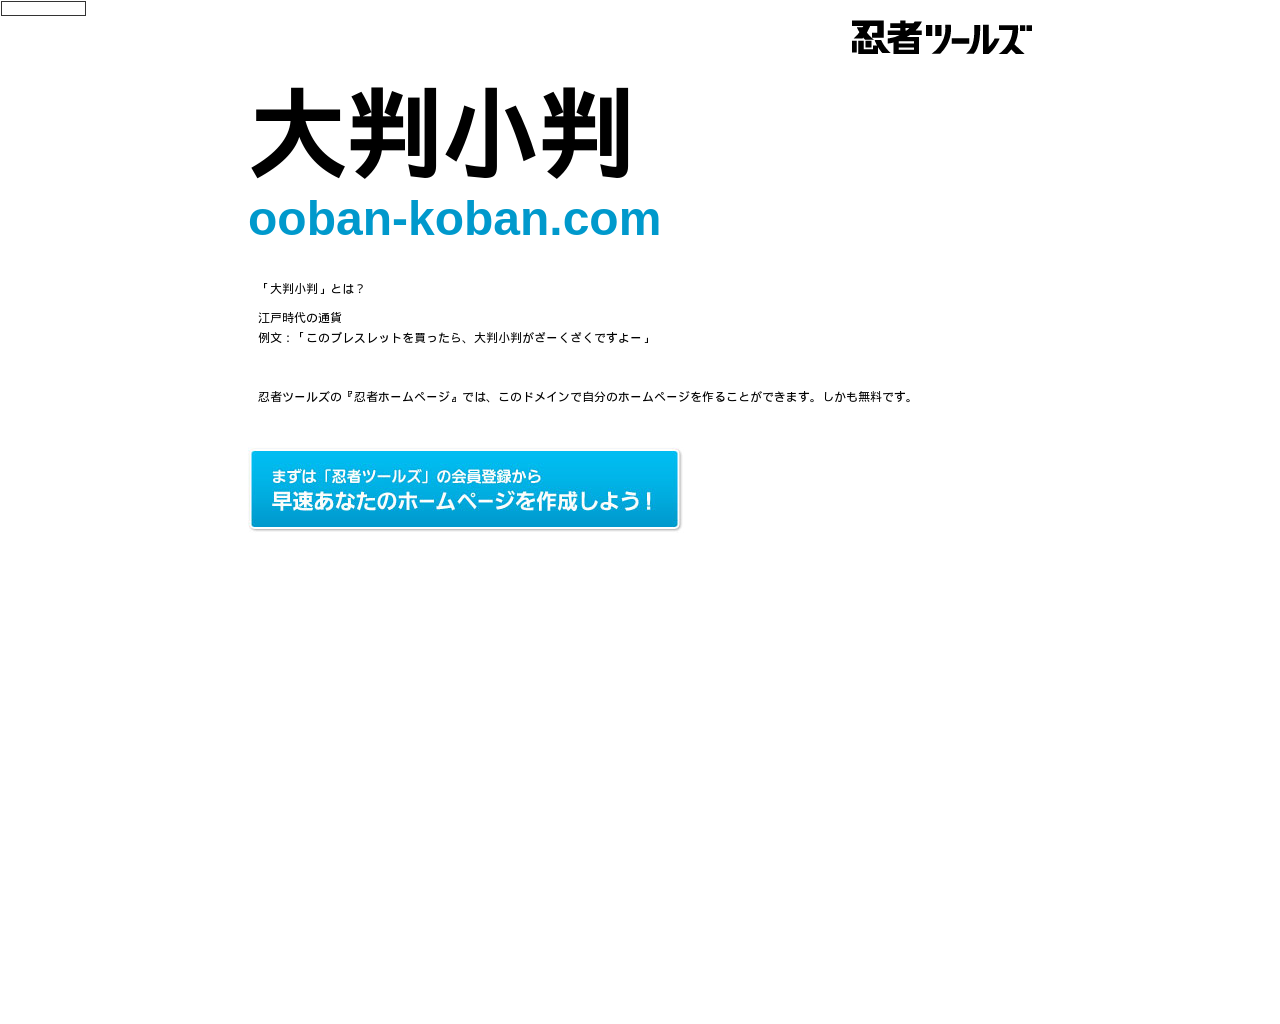 ooban-koban.com